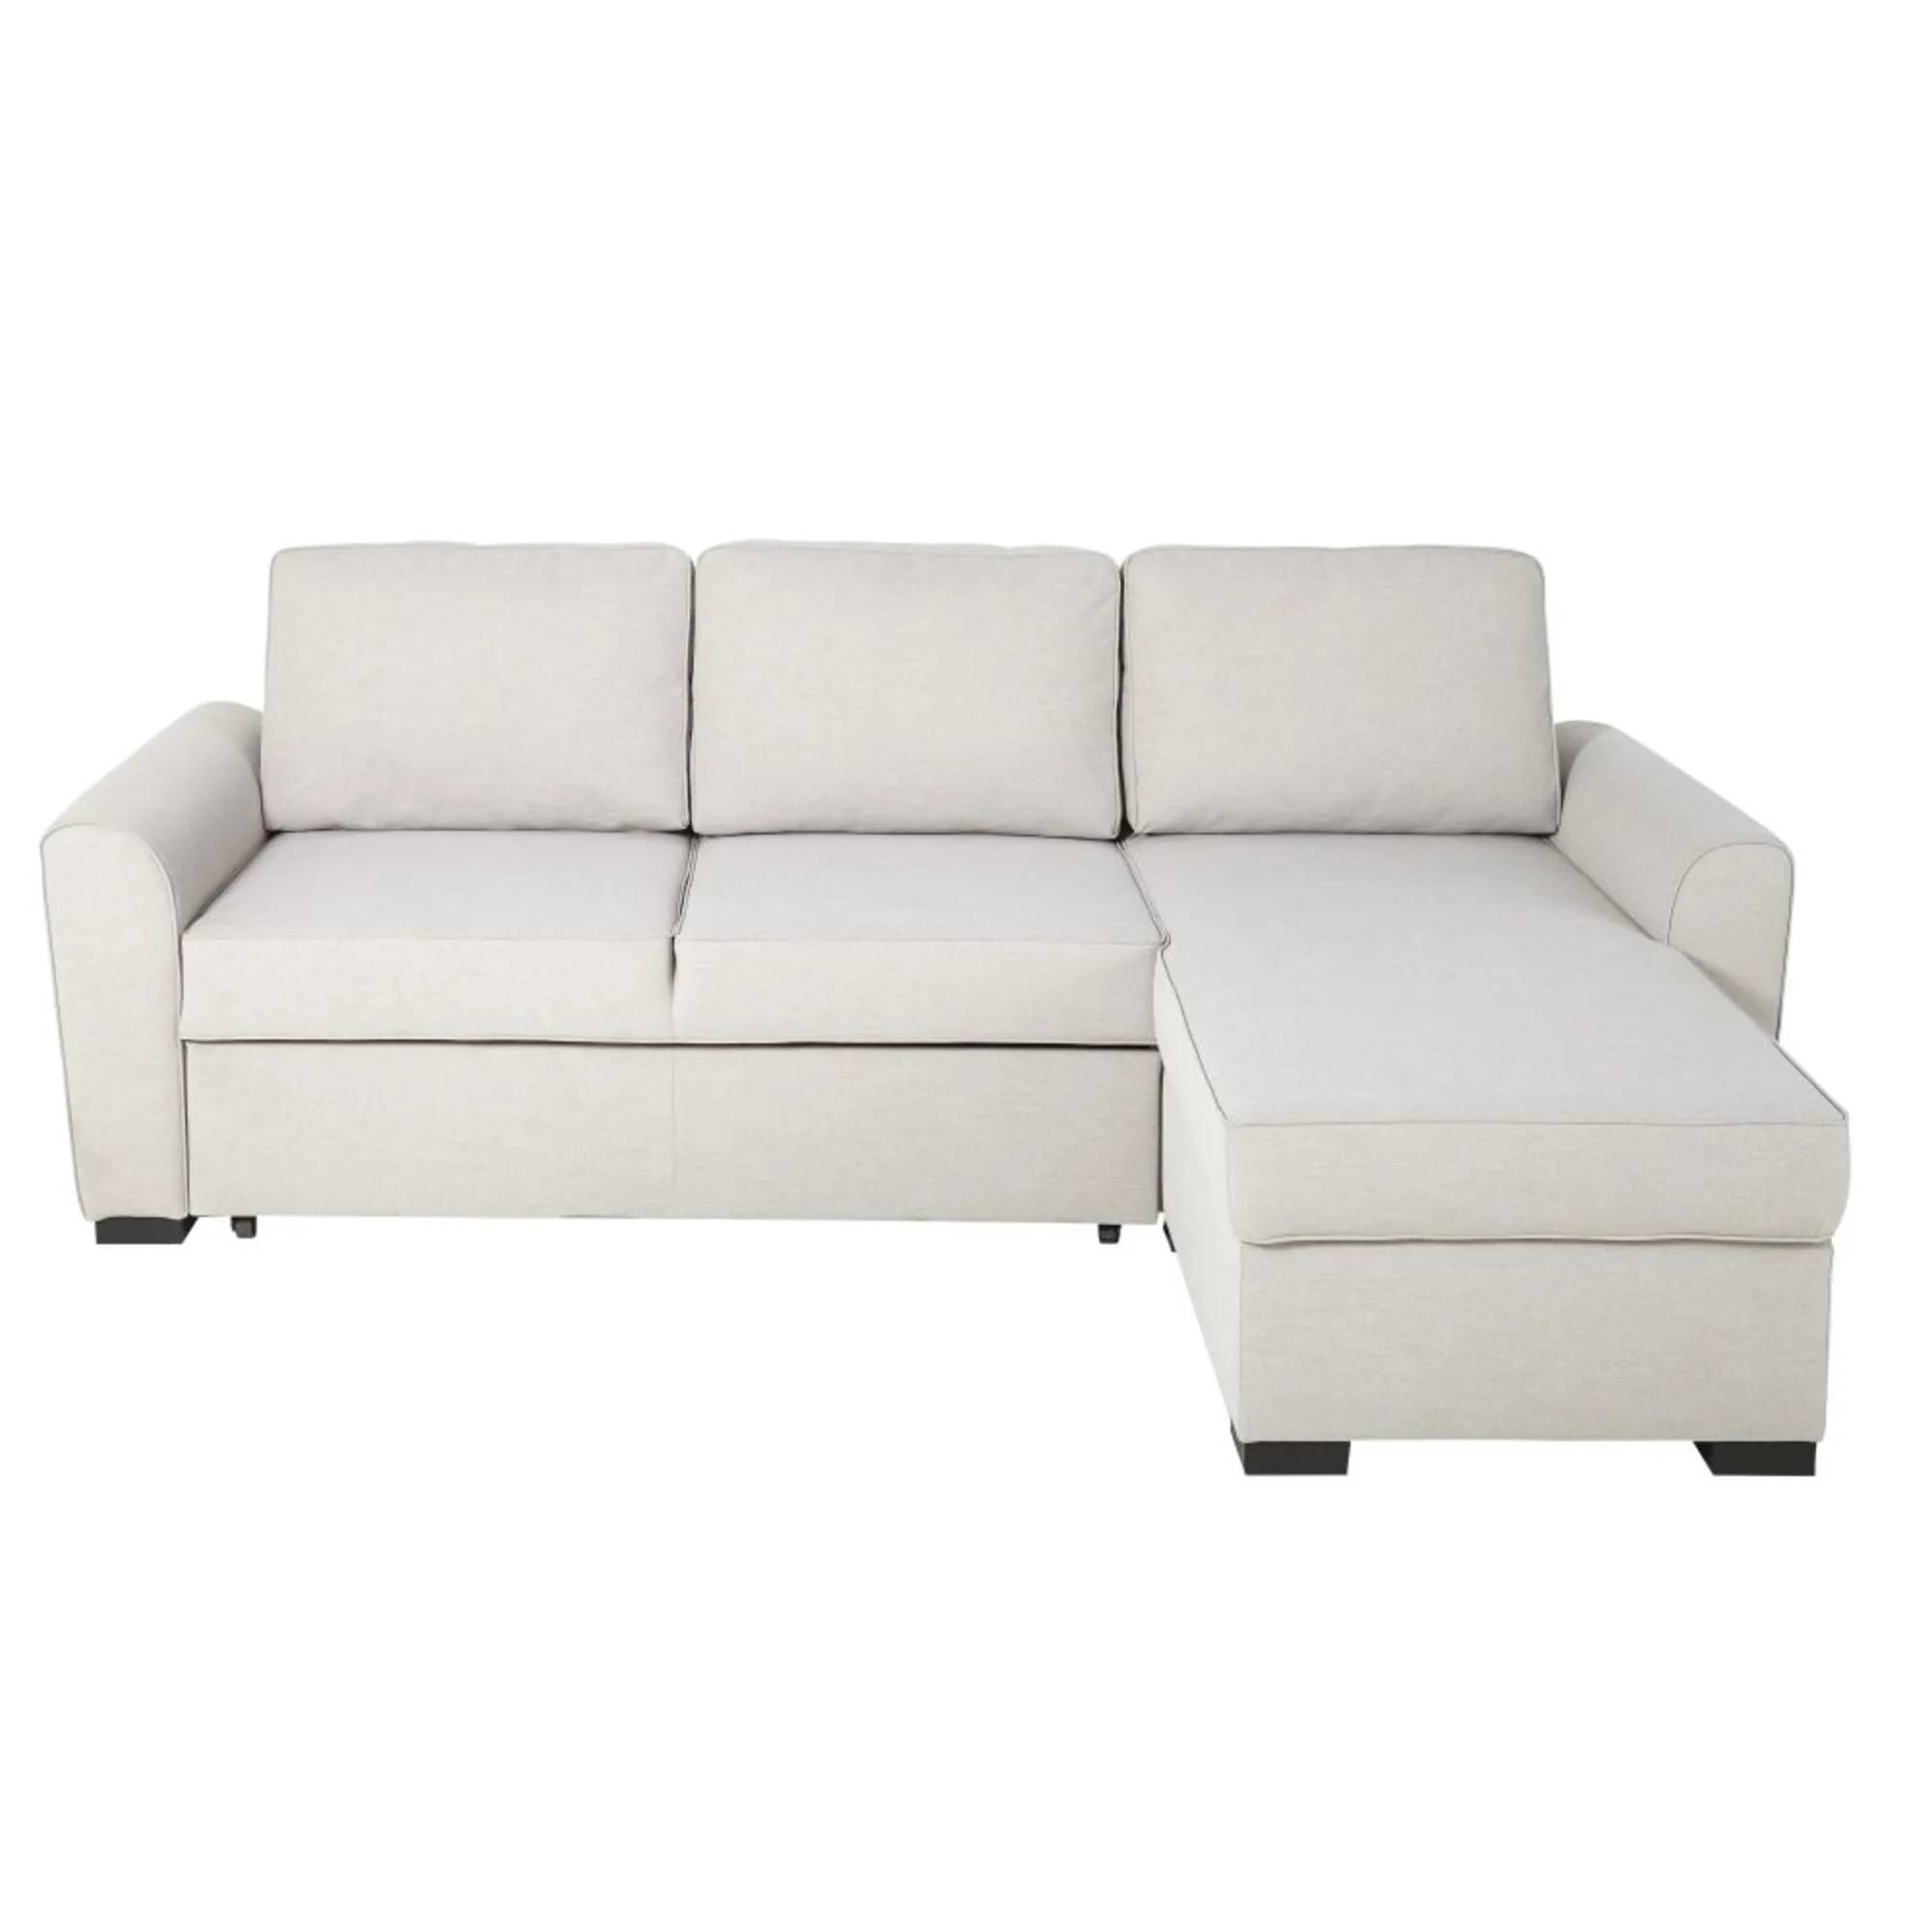 sofa-cama-esquinero-de-3-4-plazas-gris-claro-1000-16-9-188240_1